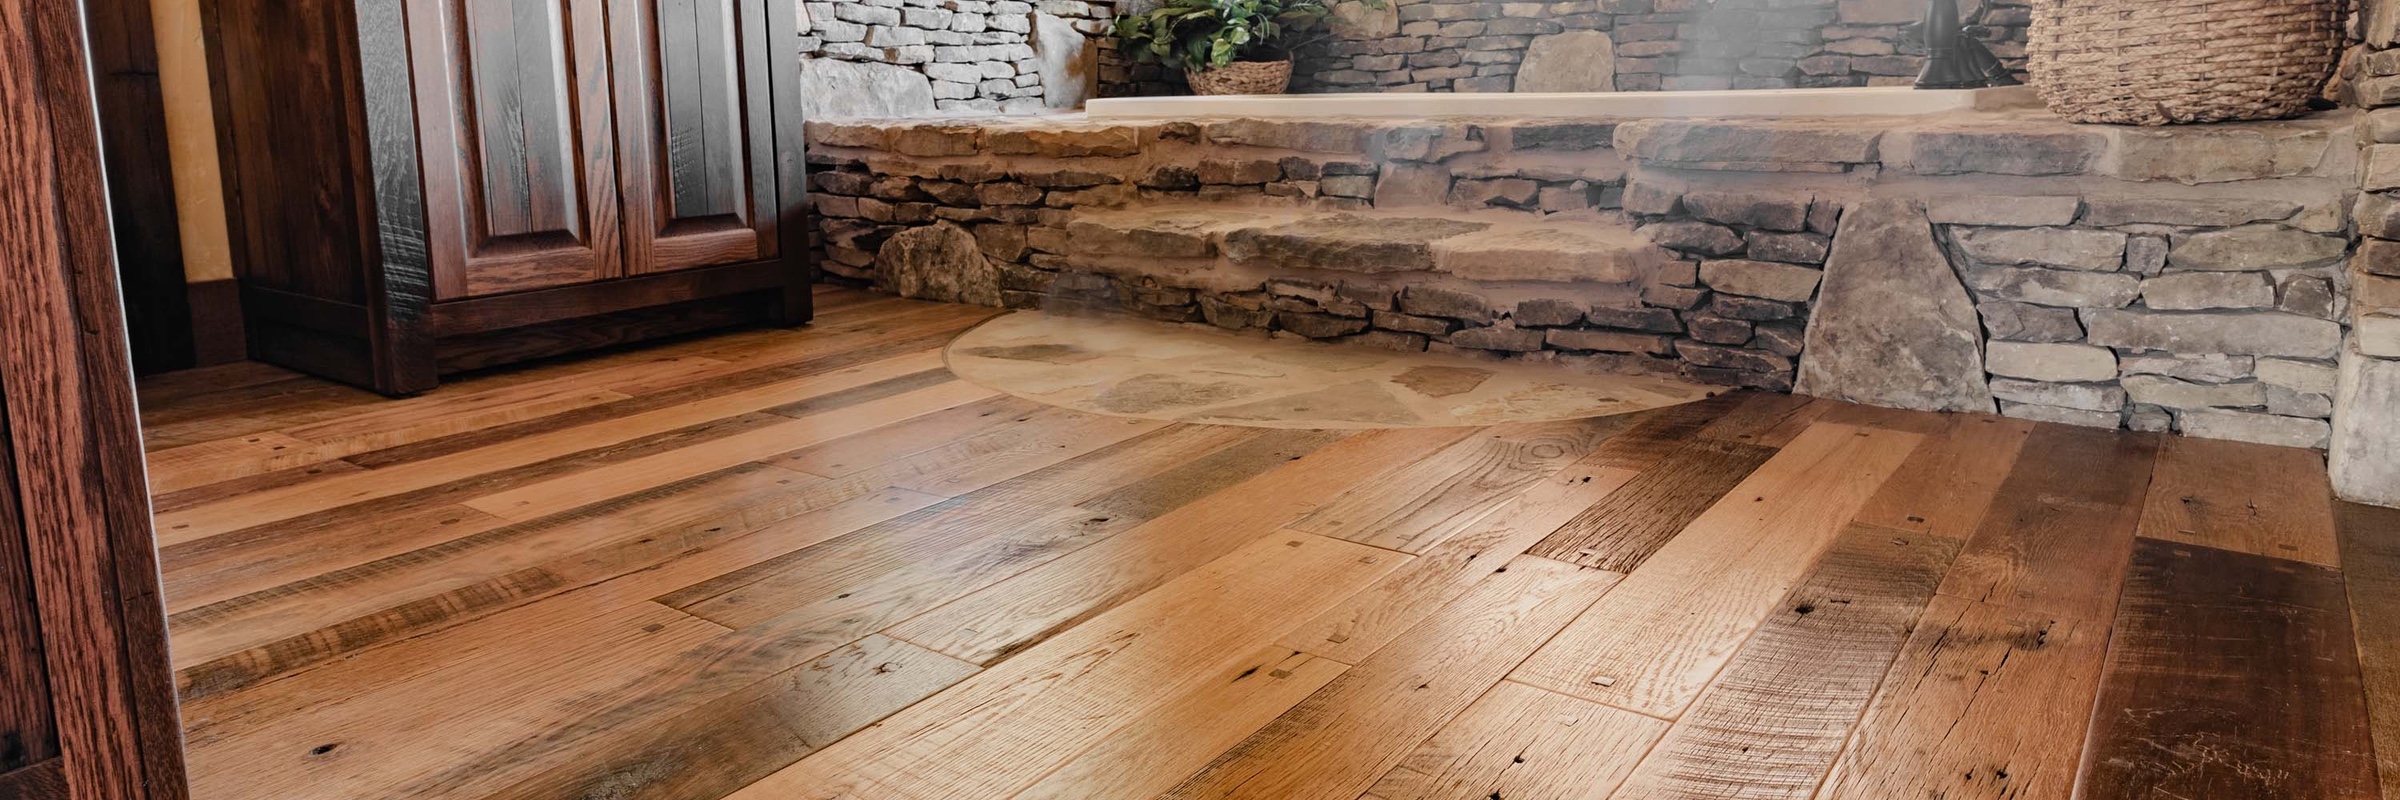 Hardwood flooring image